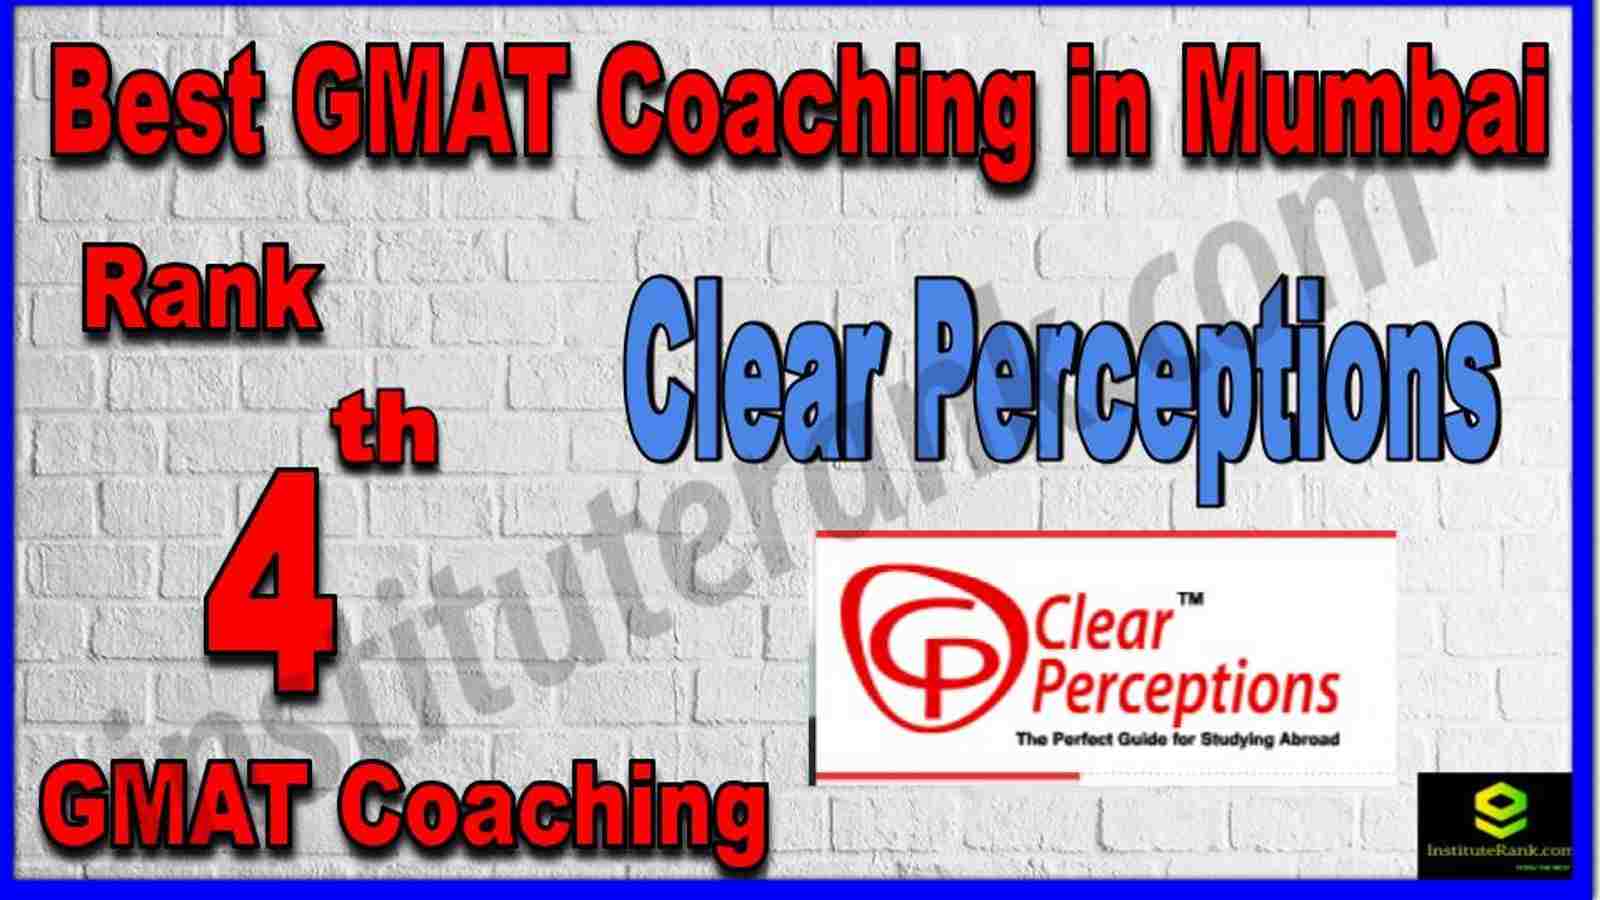 Rank 4th Best GMAT Coaching in Mumbai